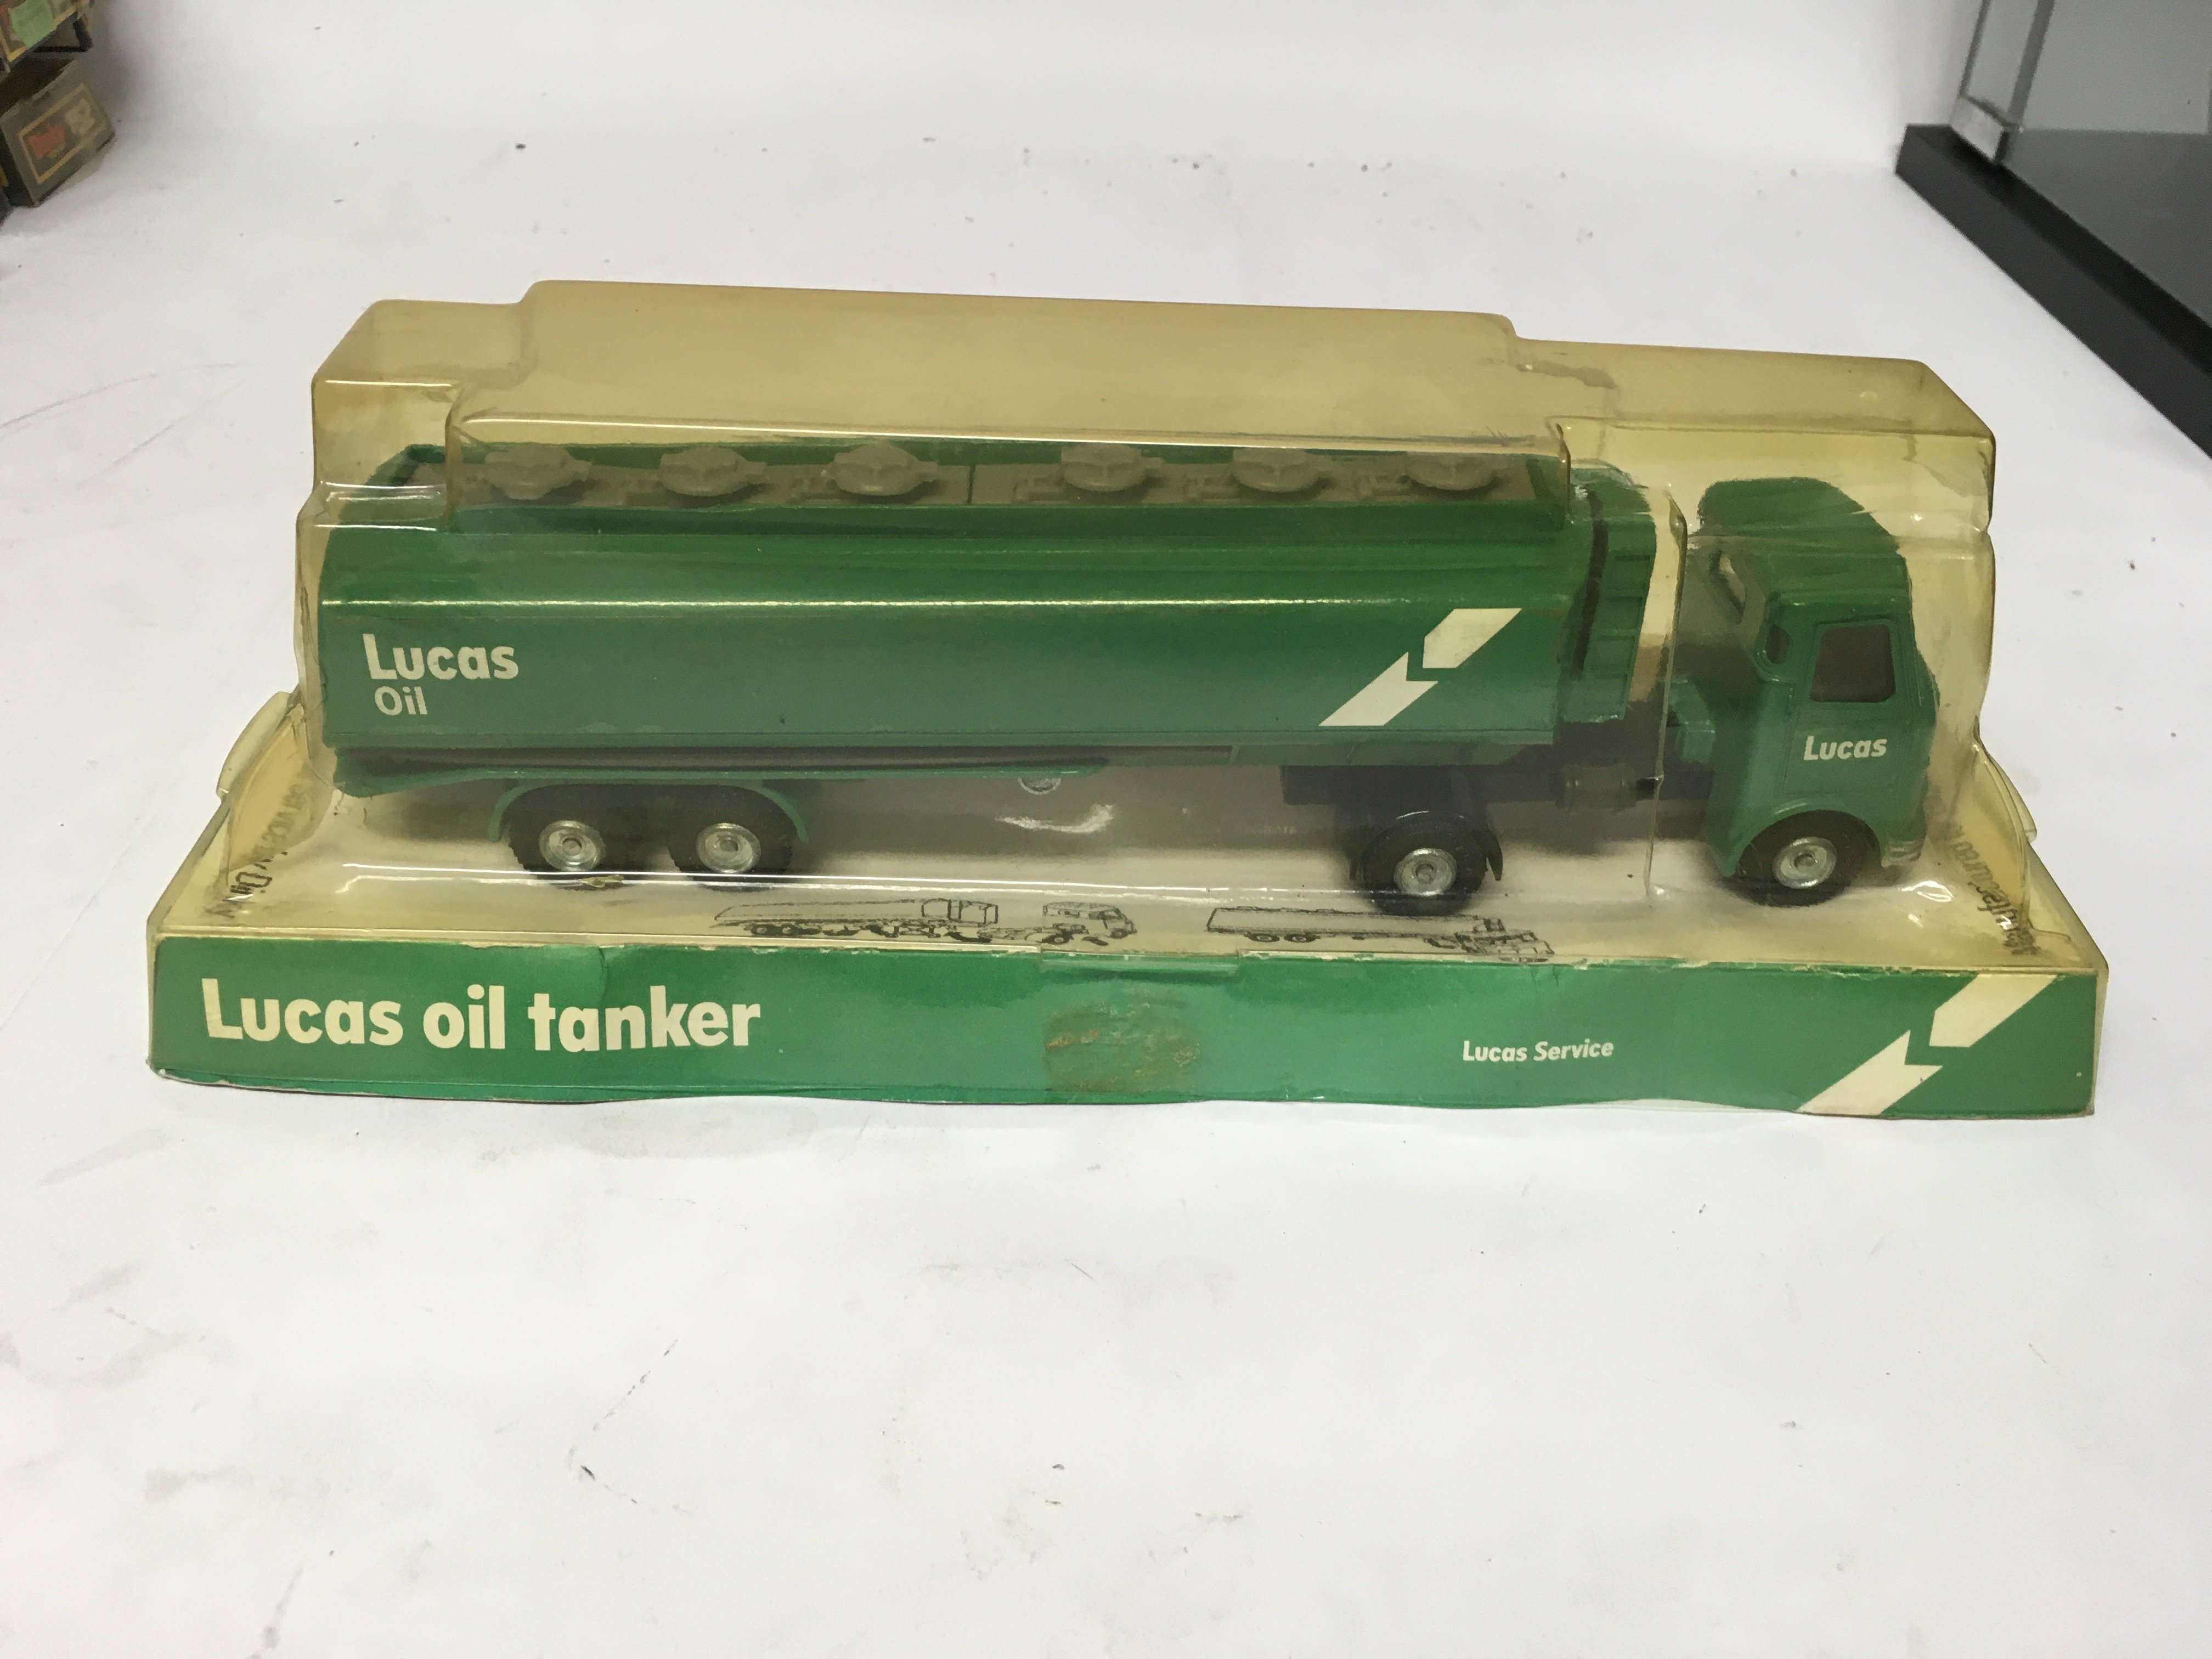 Dinky toys, #945 AEC Tanker, Lucas oil tanker promotional in Original box